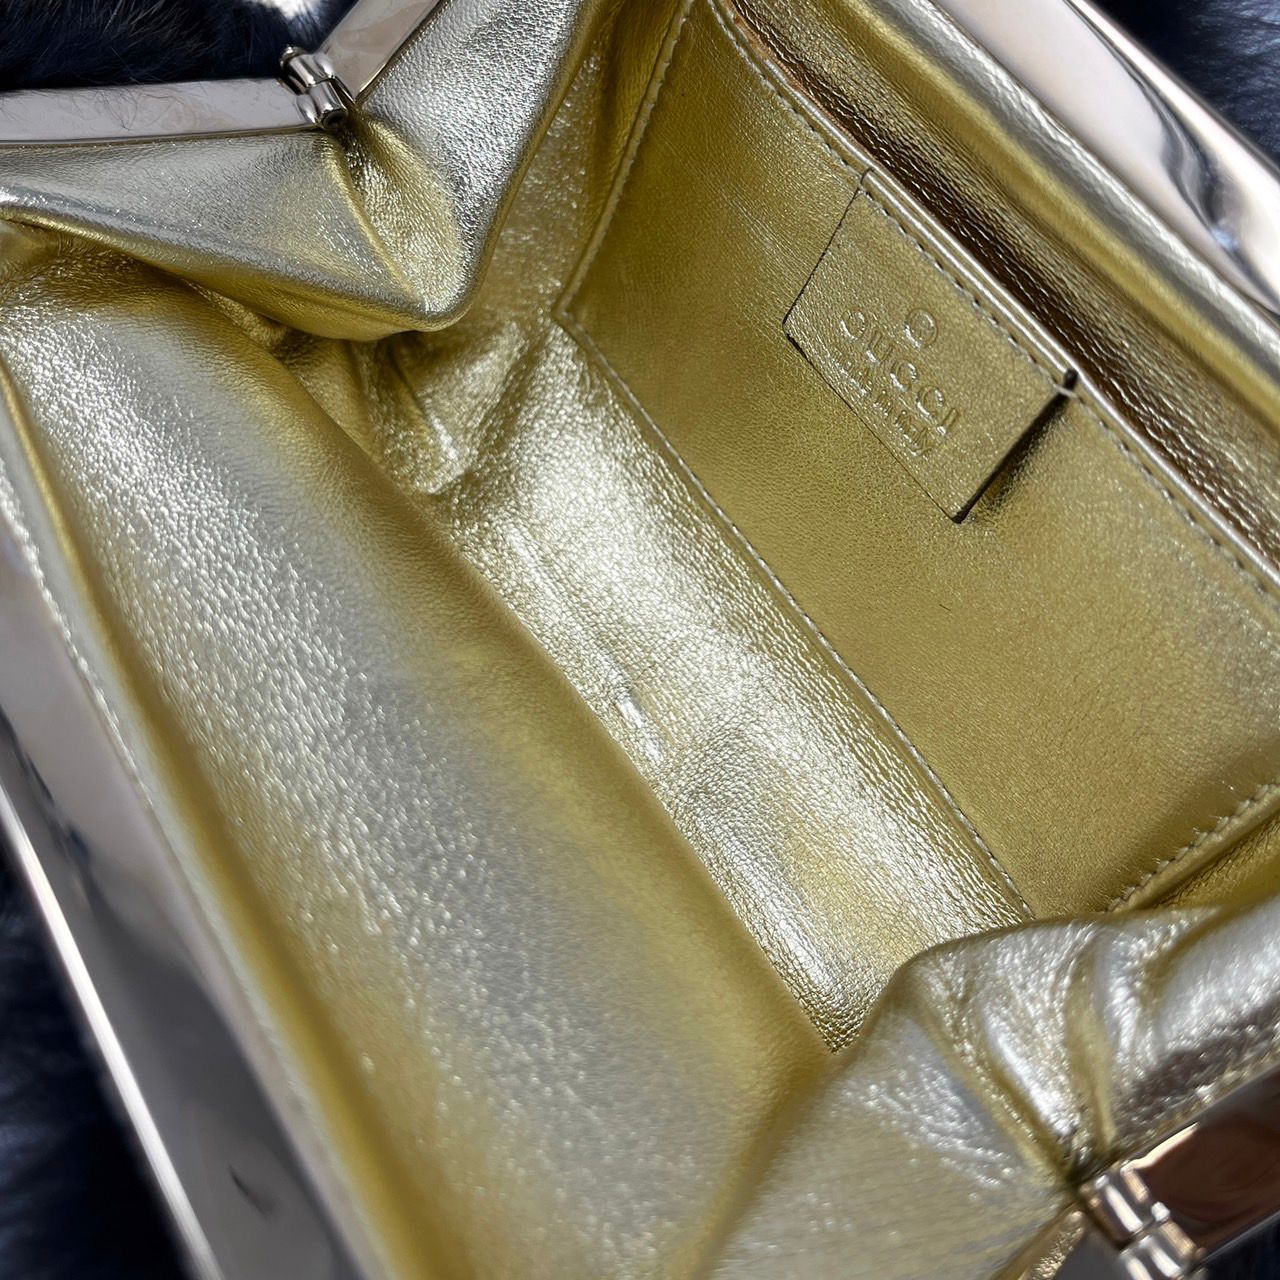 Gucci x Tom Ford Black Fur Mini Top Handle Bag